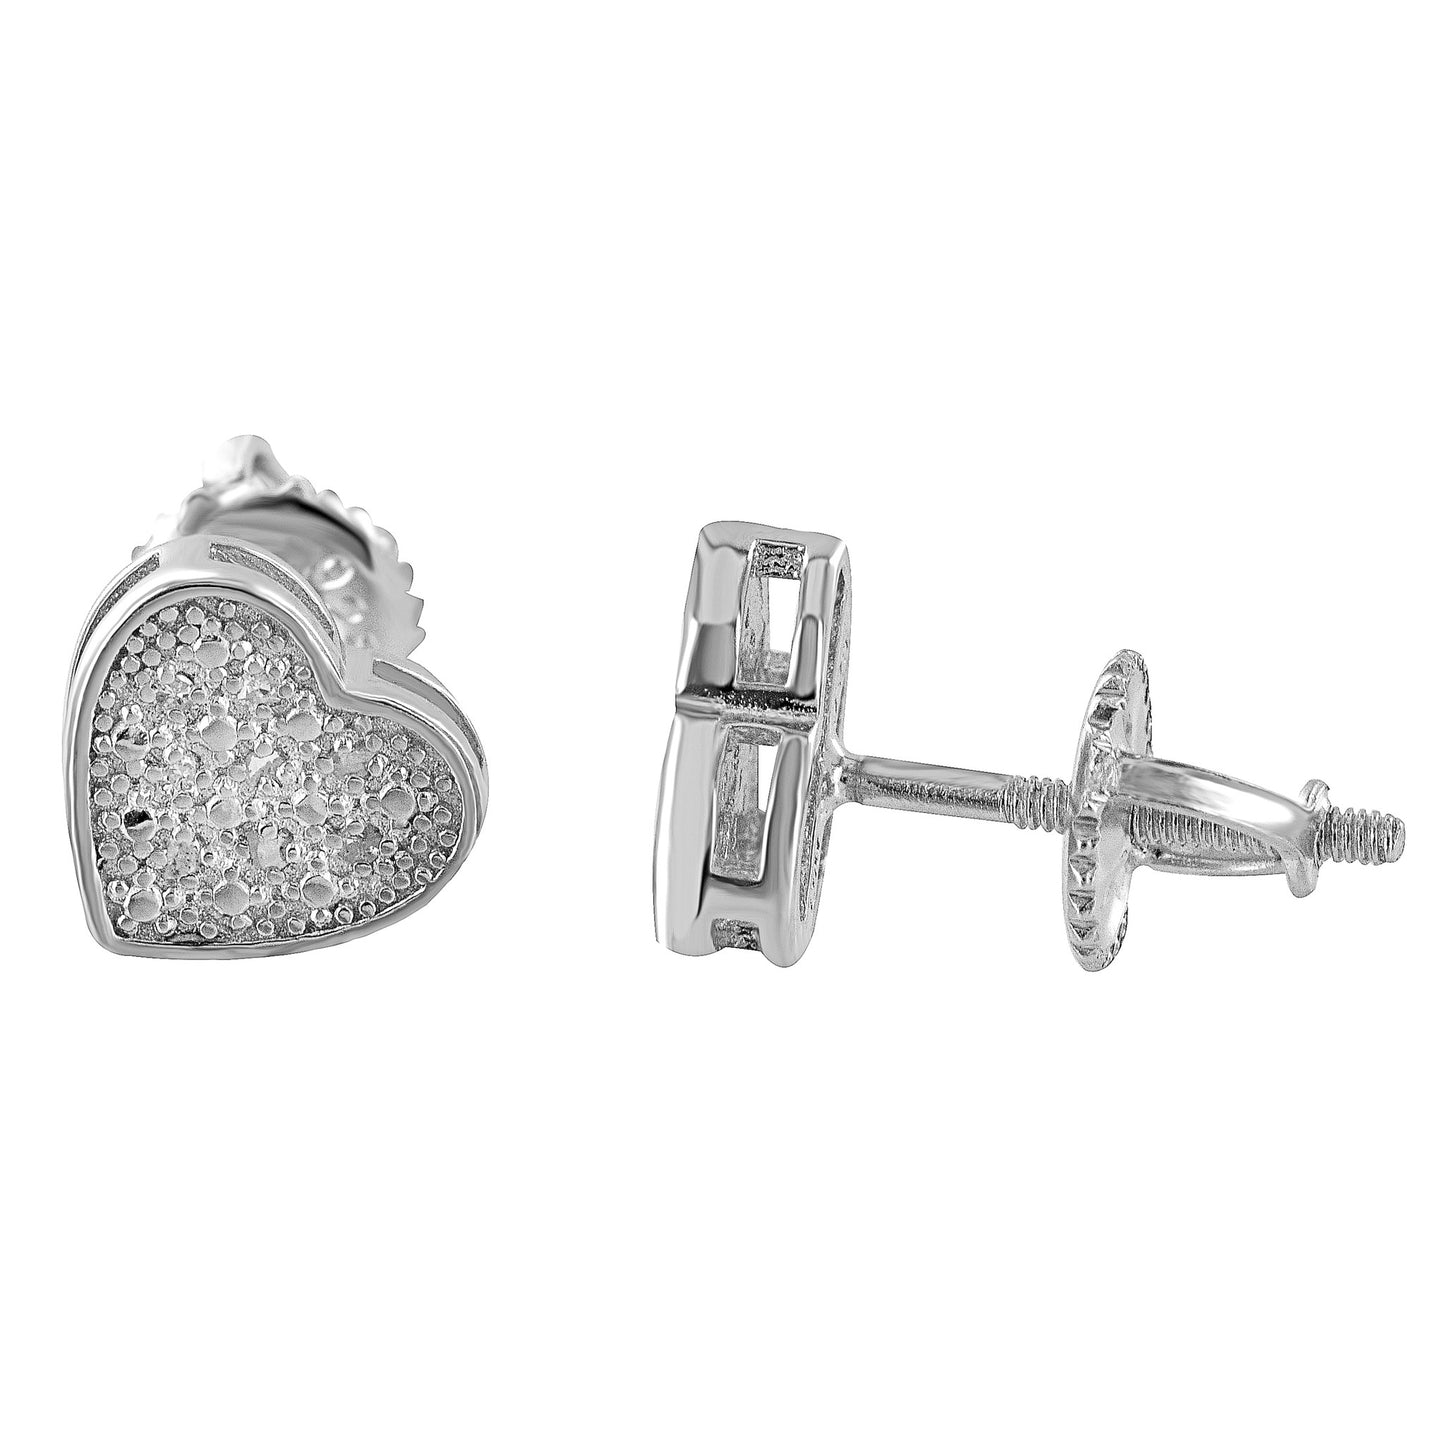 Womens Heart Design Earrings Sterling SIlver With Genuine Diamonds